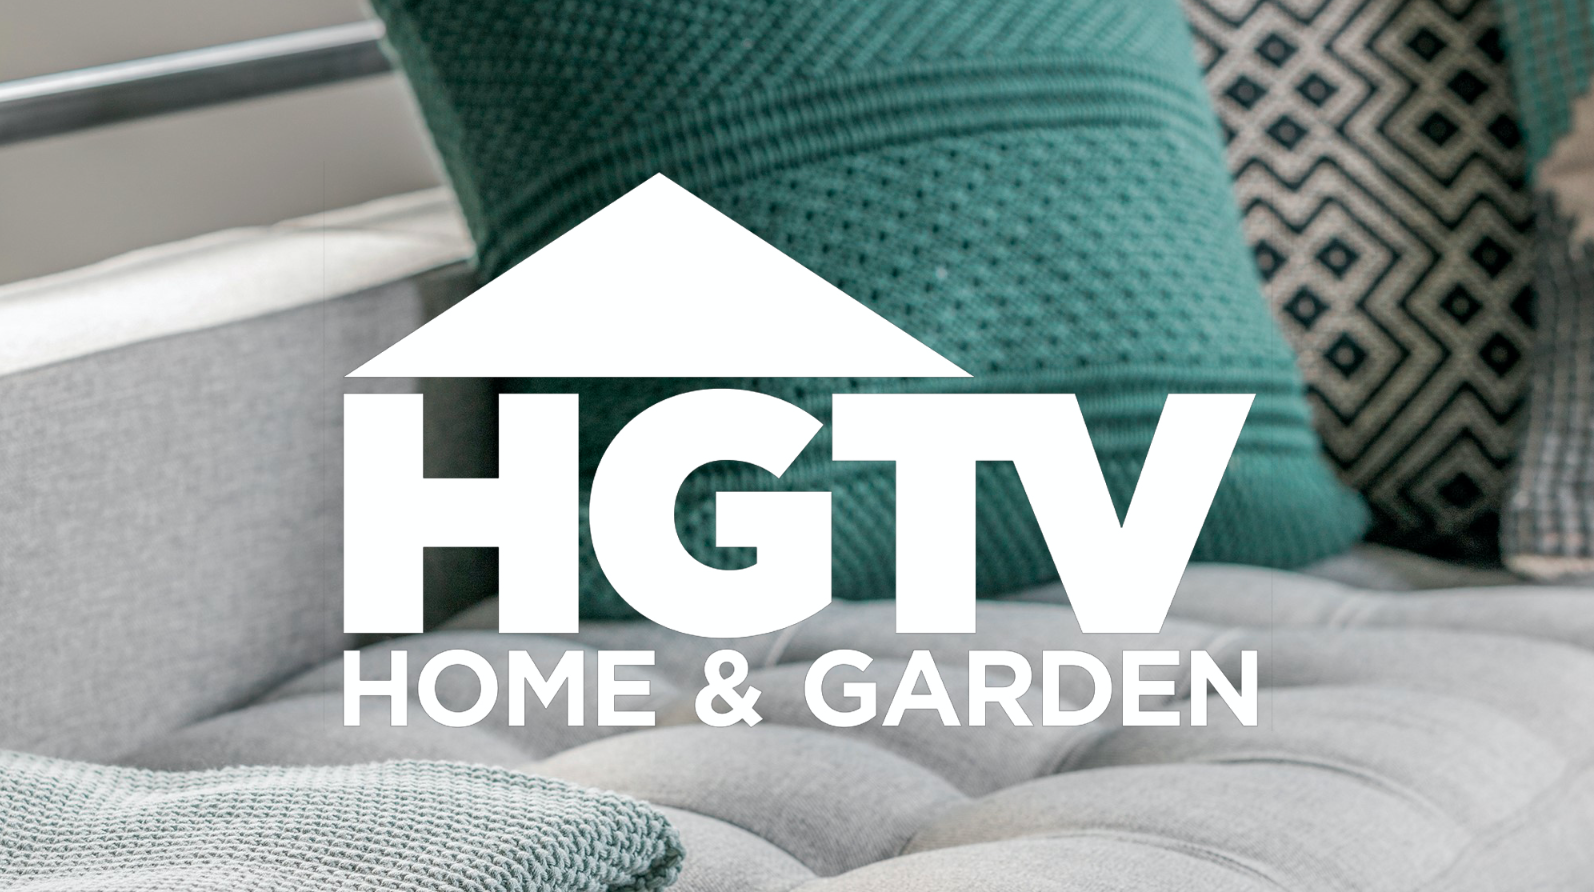 Home and Garden Телеканал. Канал Hgtv. Логотип телеканала Hgtv. Канал Hgtv (Home & Garden. Since discover